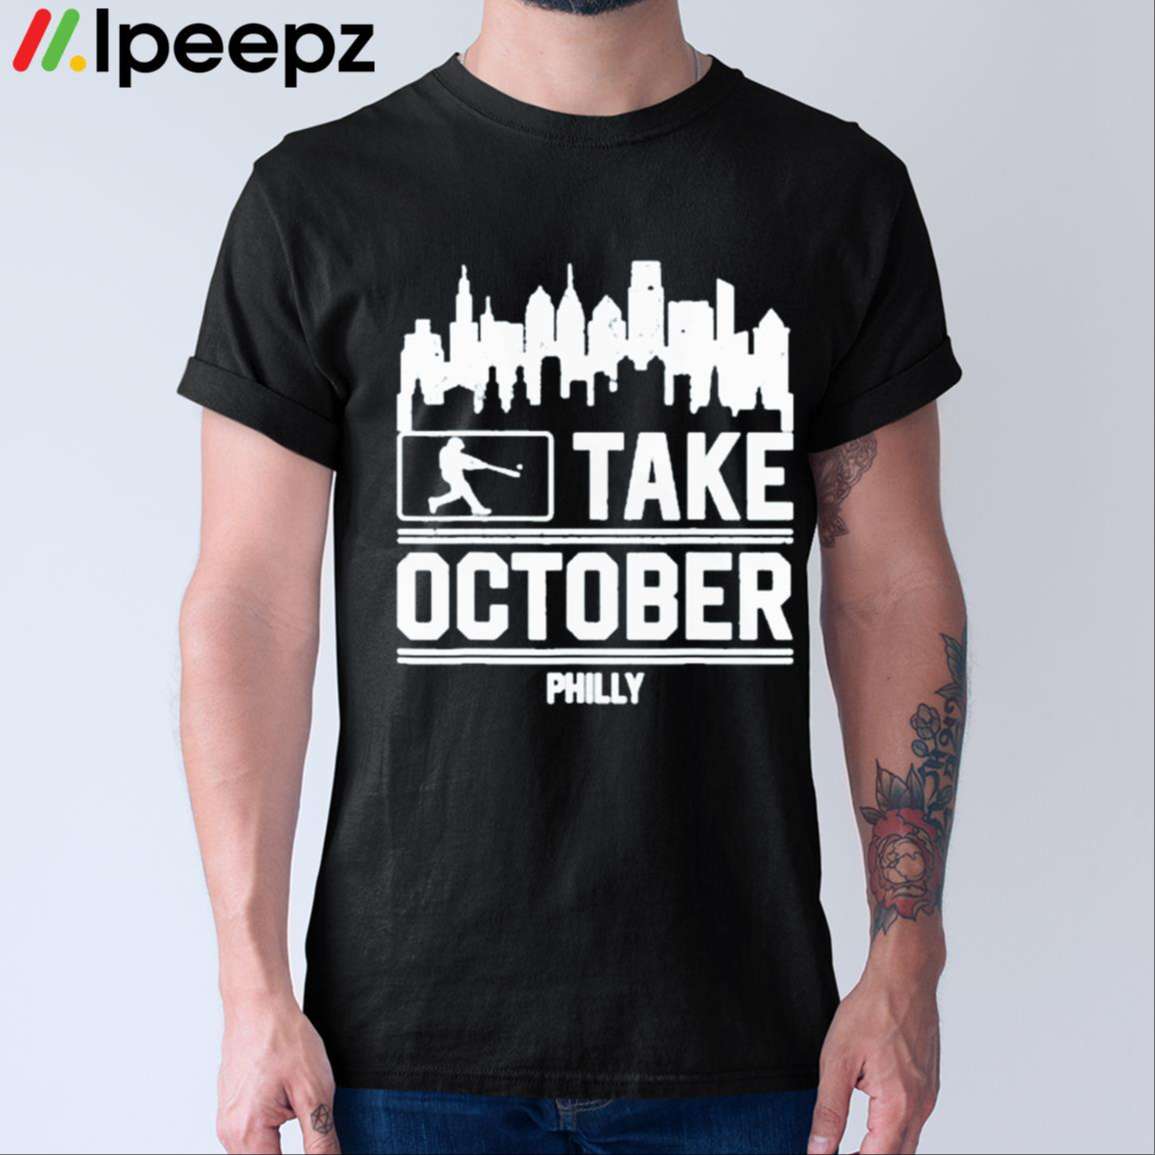 Ipeepz Philadelphia Phillies Baseball Philly Take October Shirt